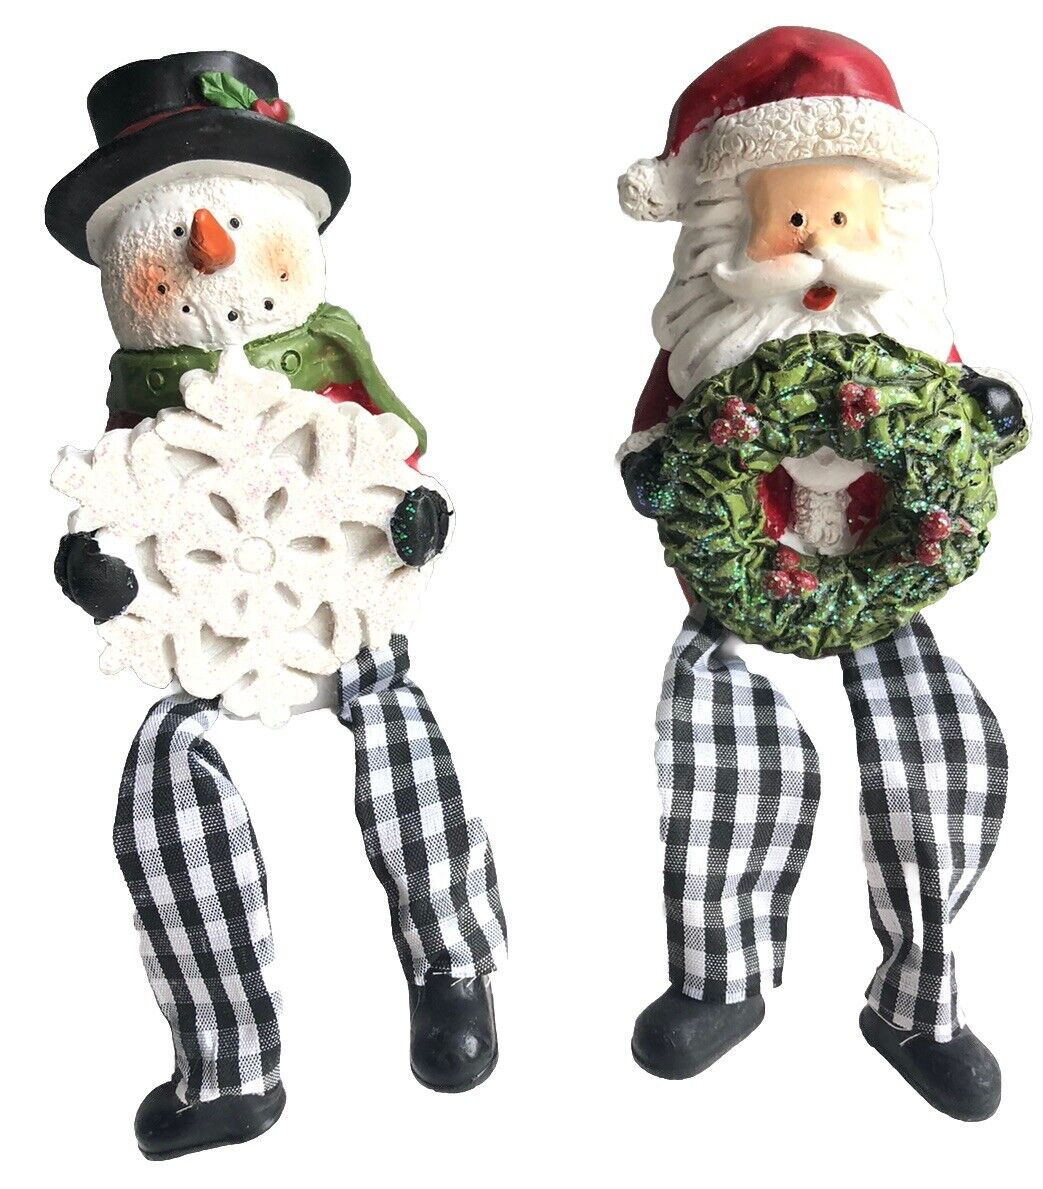 Santa Claus & Snowman Shelf Sitter Small Decorative Holiday Accents Plaid Pants